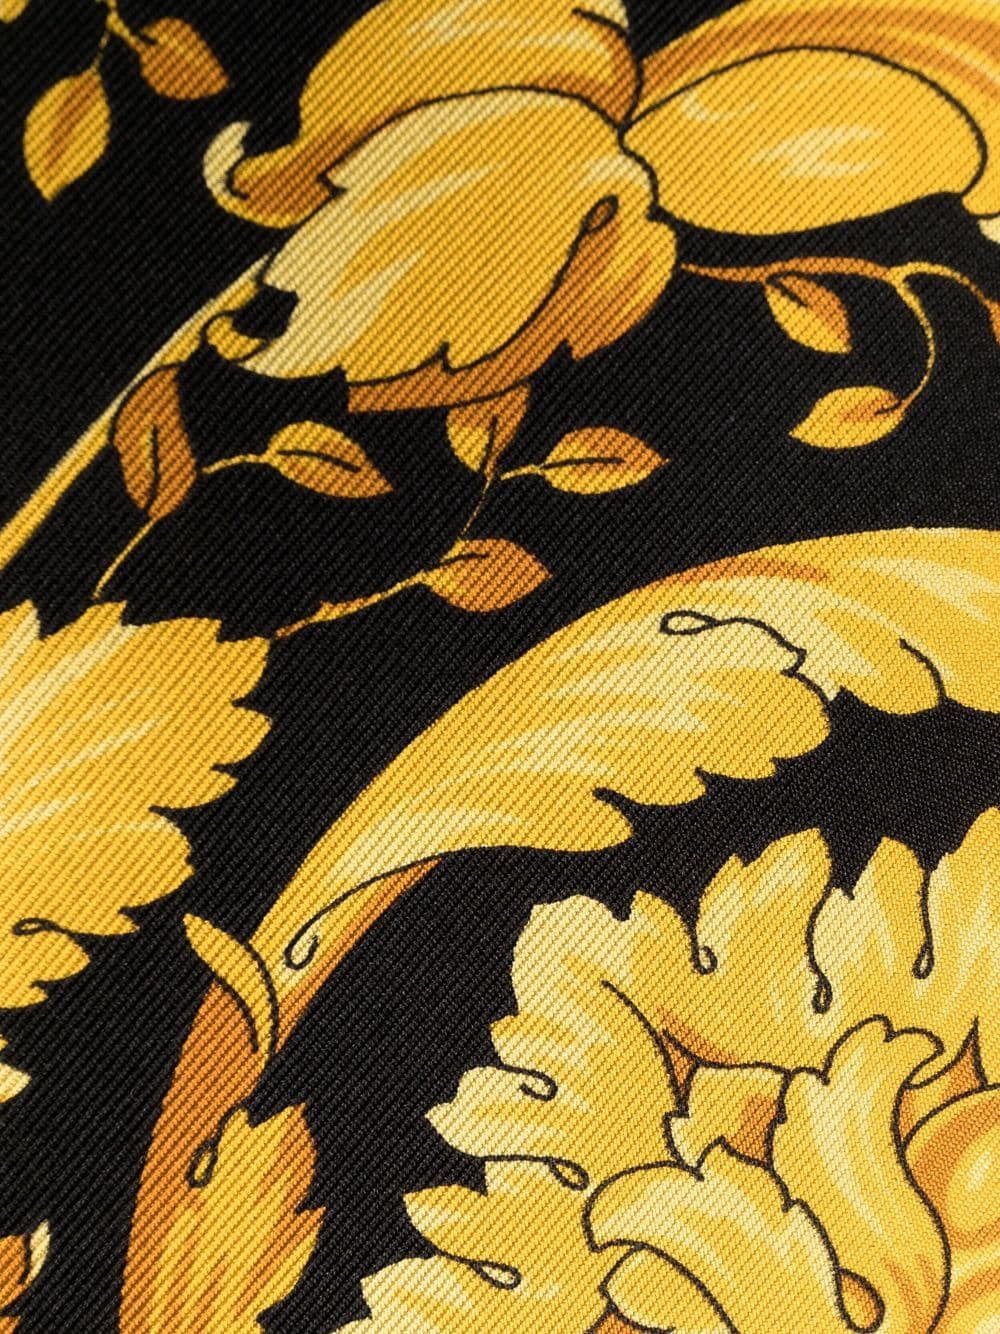 Versace Barocco print silk shirt - Yellow